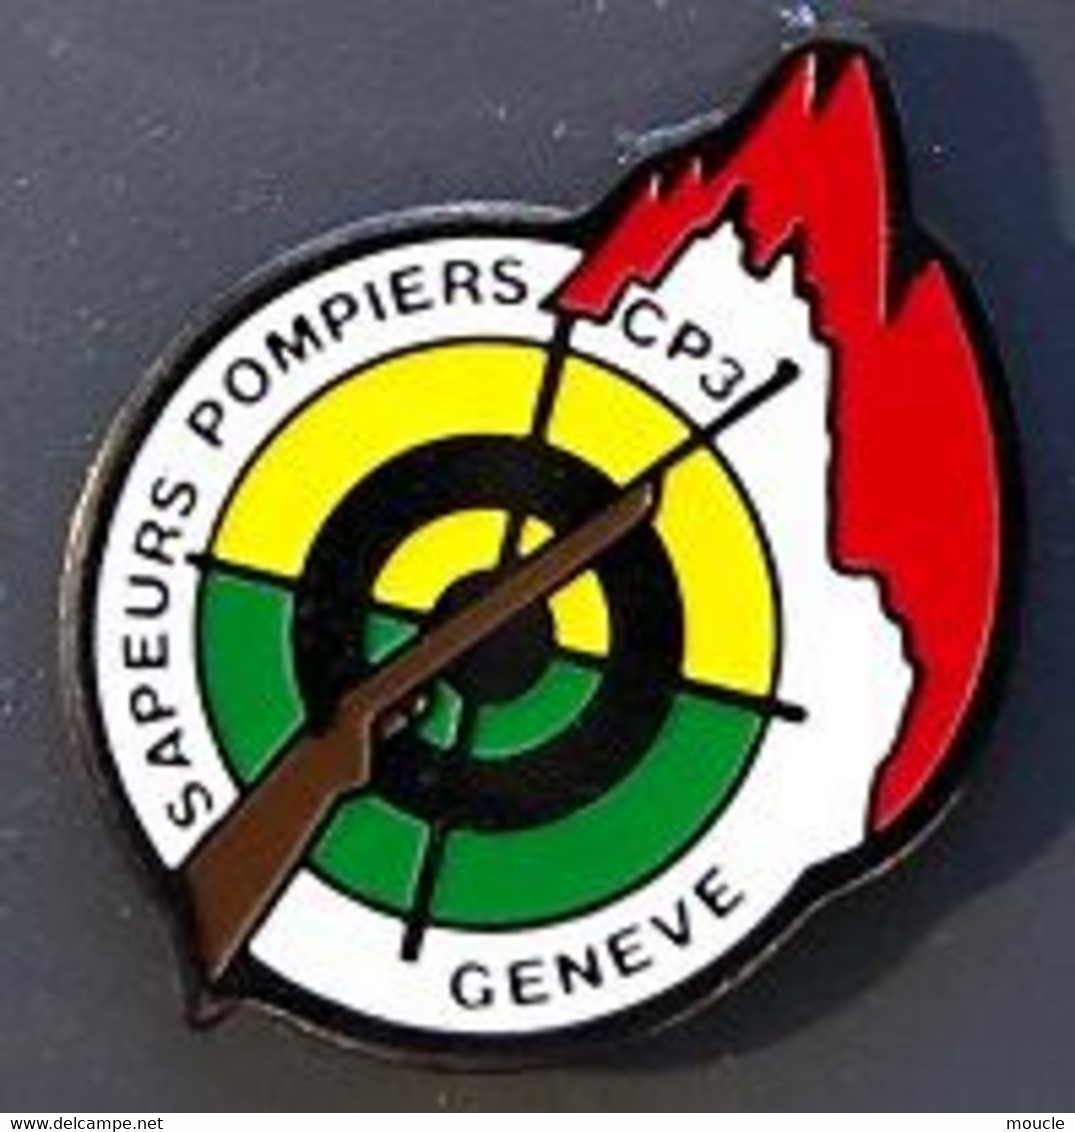 SAPEURS POMPIERS GENEVE CP3 - COMPAGNIE 3 - FUSIL - CIBLE - GENFER FEUERWEHTMANN - FIREFIGHTER GENEVA - POMPIERE -  (25) - Bomberos